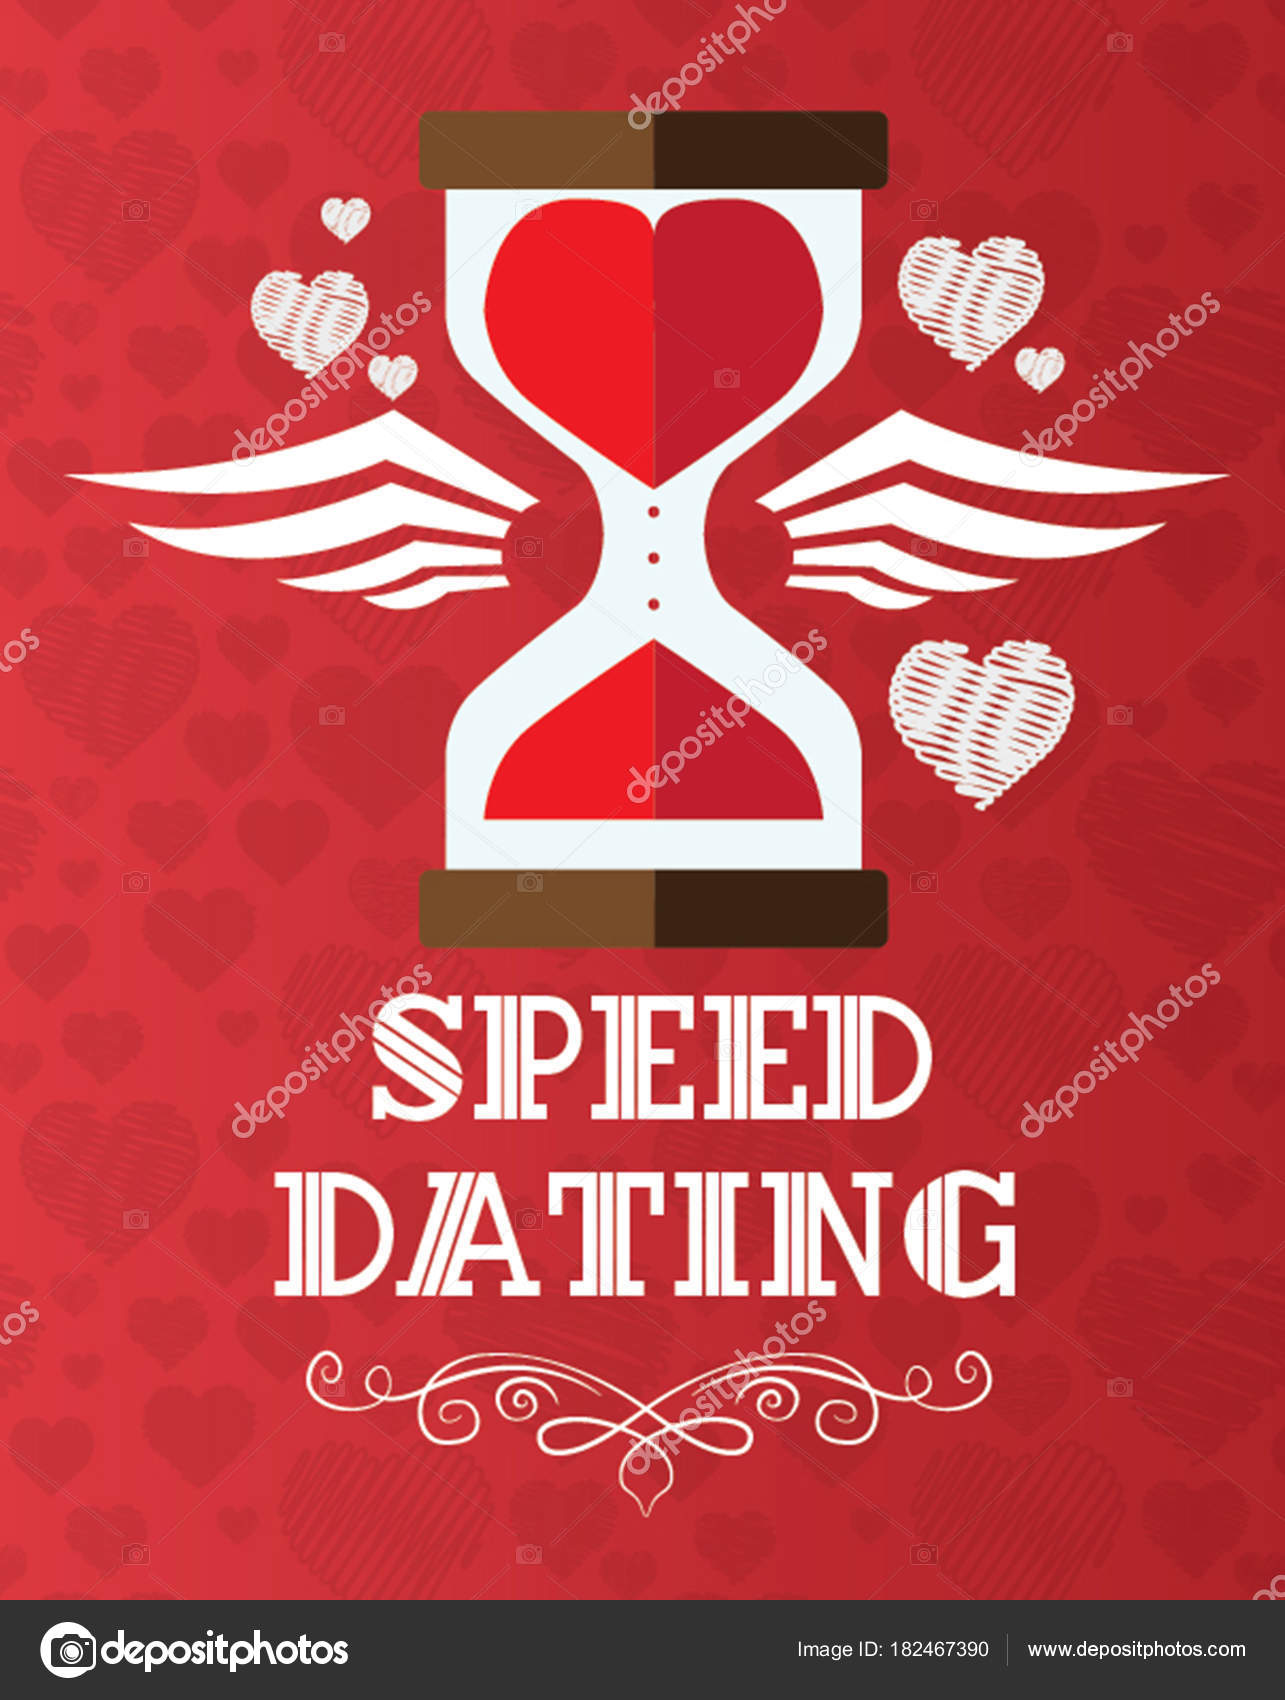 Speed dating in italiano